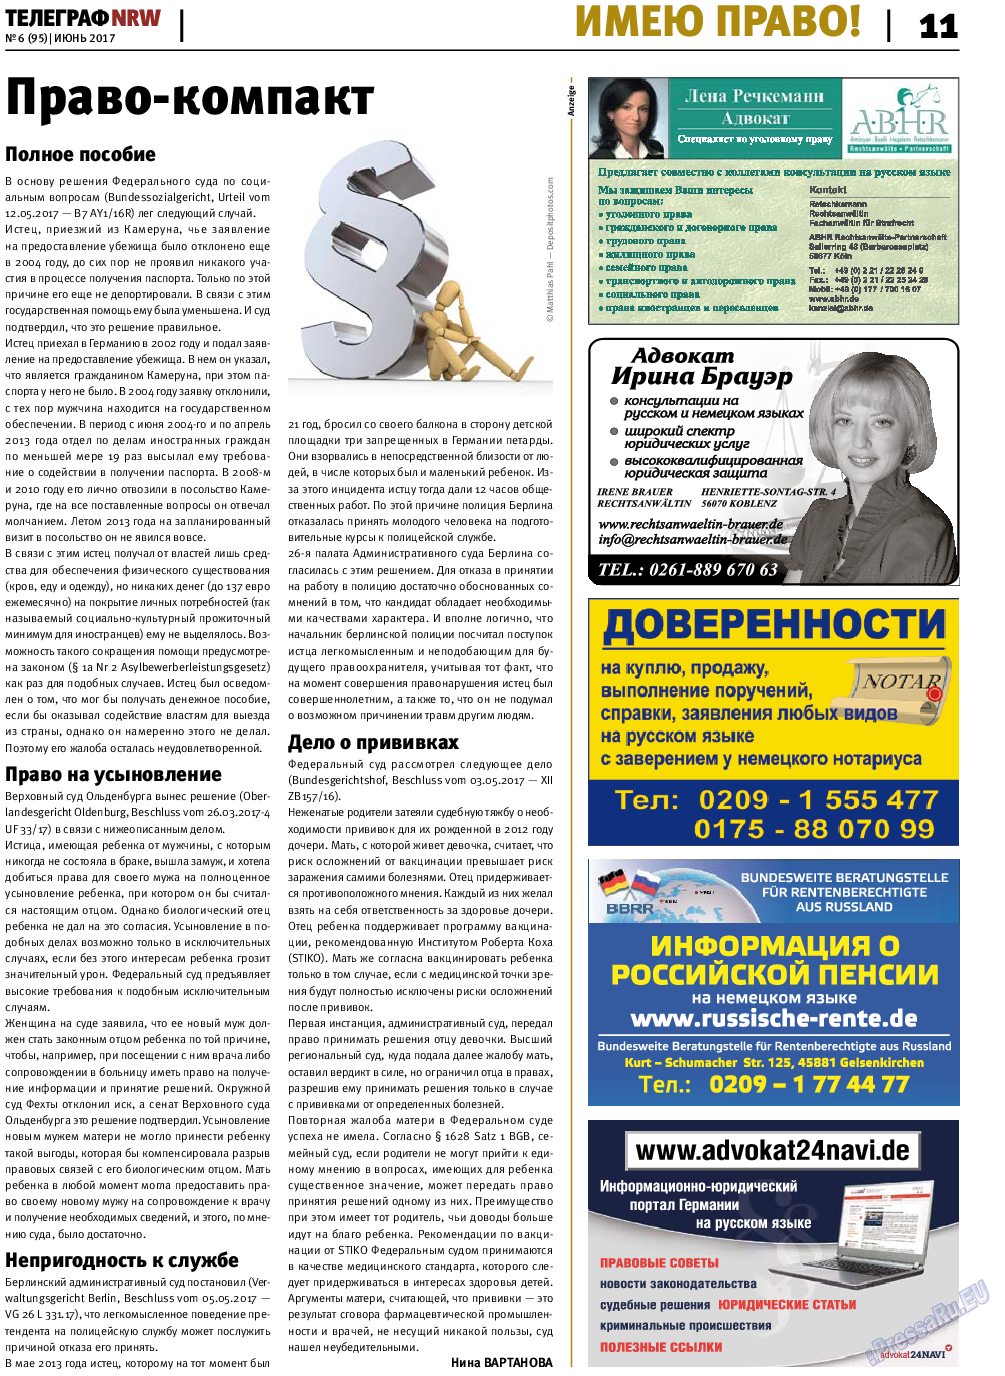 Телеграф NRW, газета. 2017 №6 стр.11